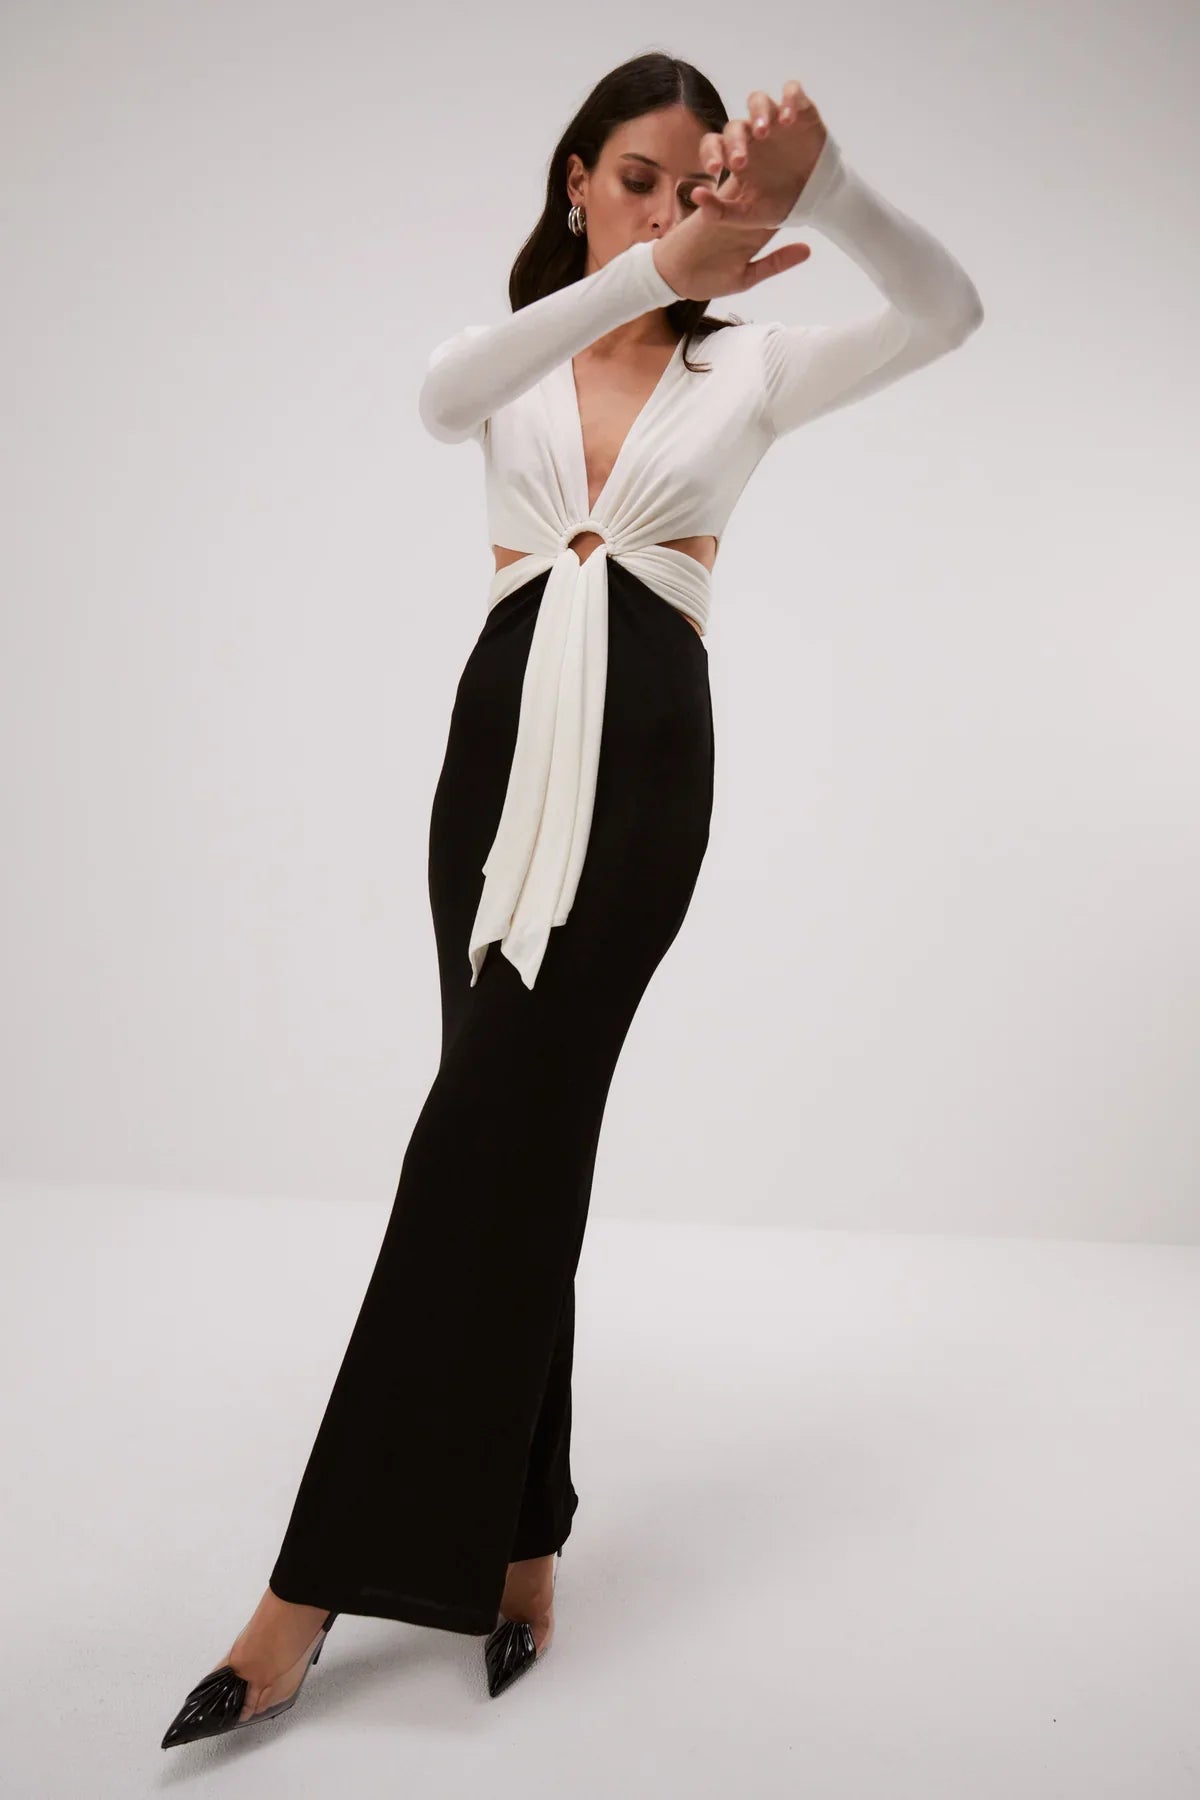 Misha Aldina Contrast Slinky Jersey Dress - Ivory/Black - JAUS